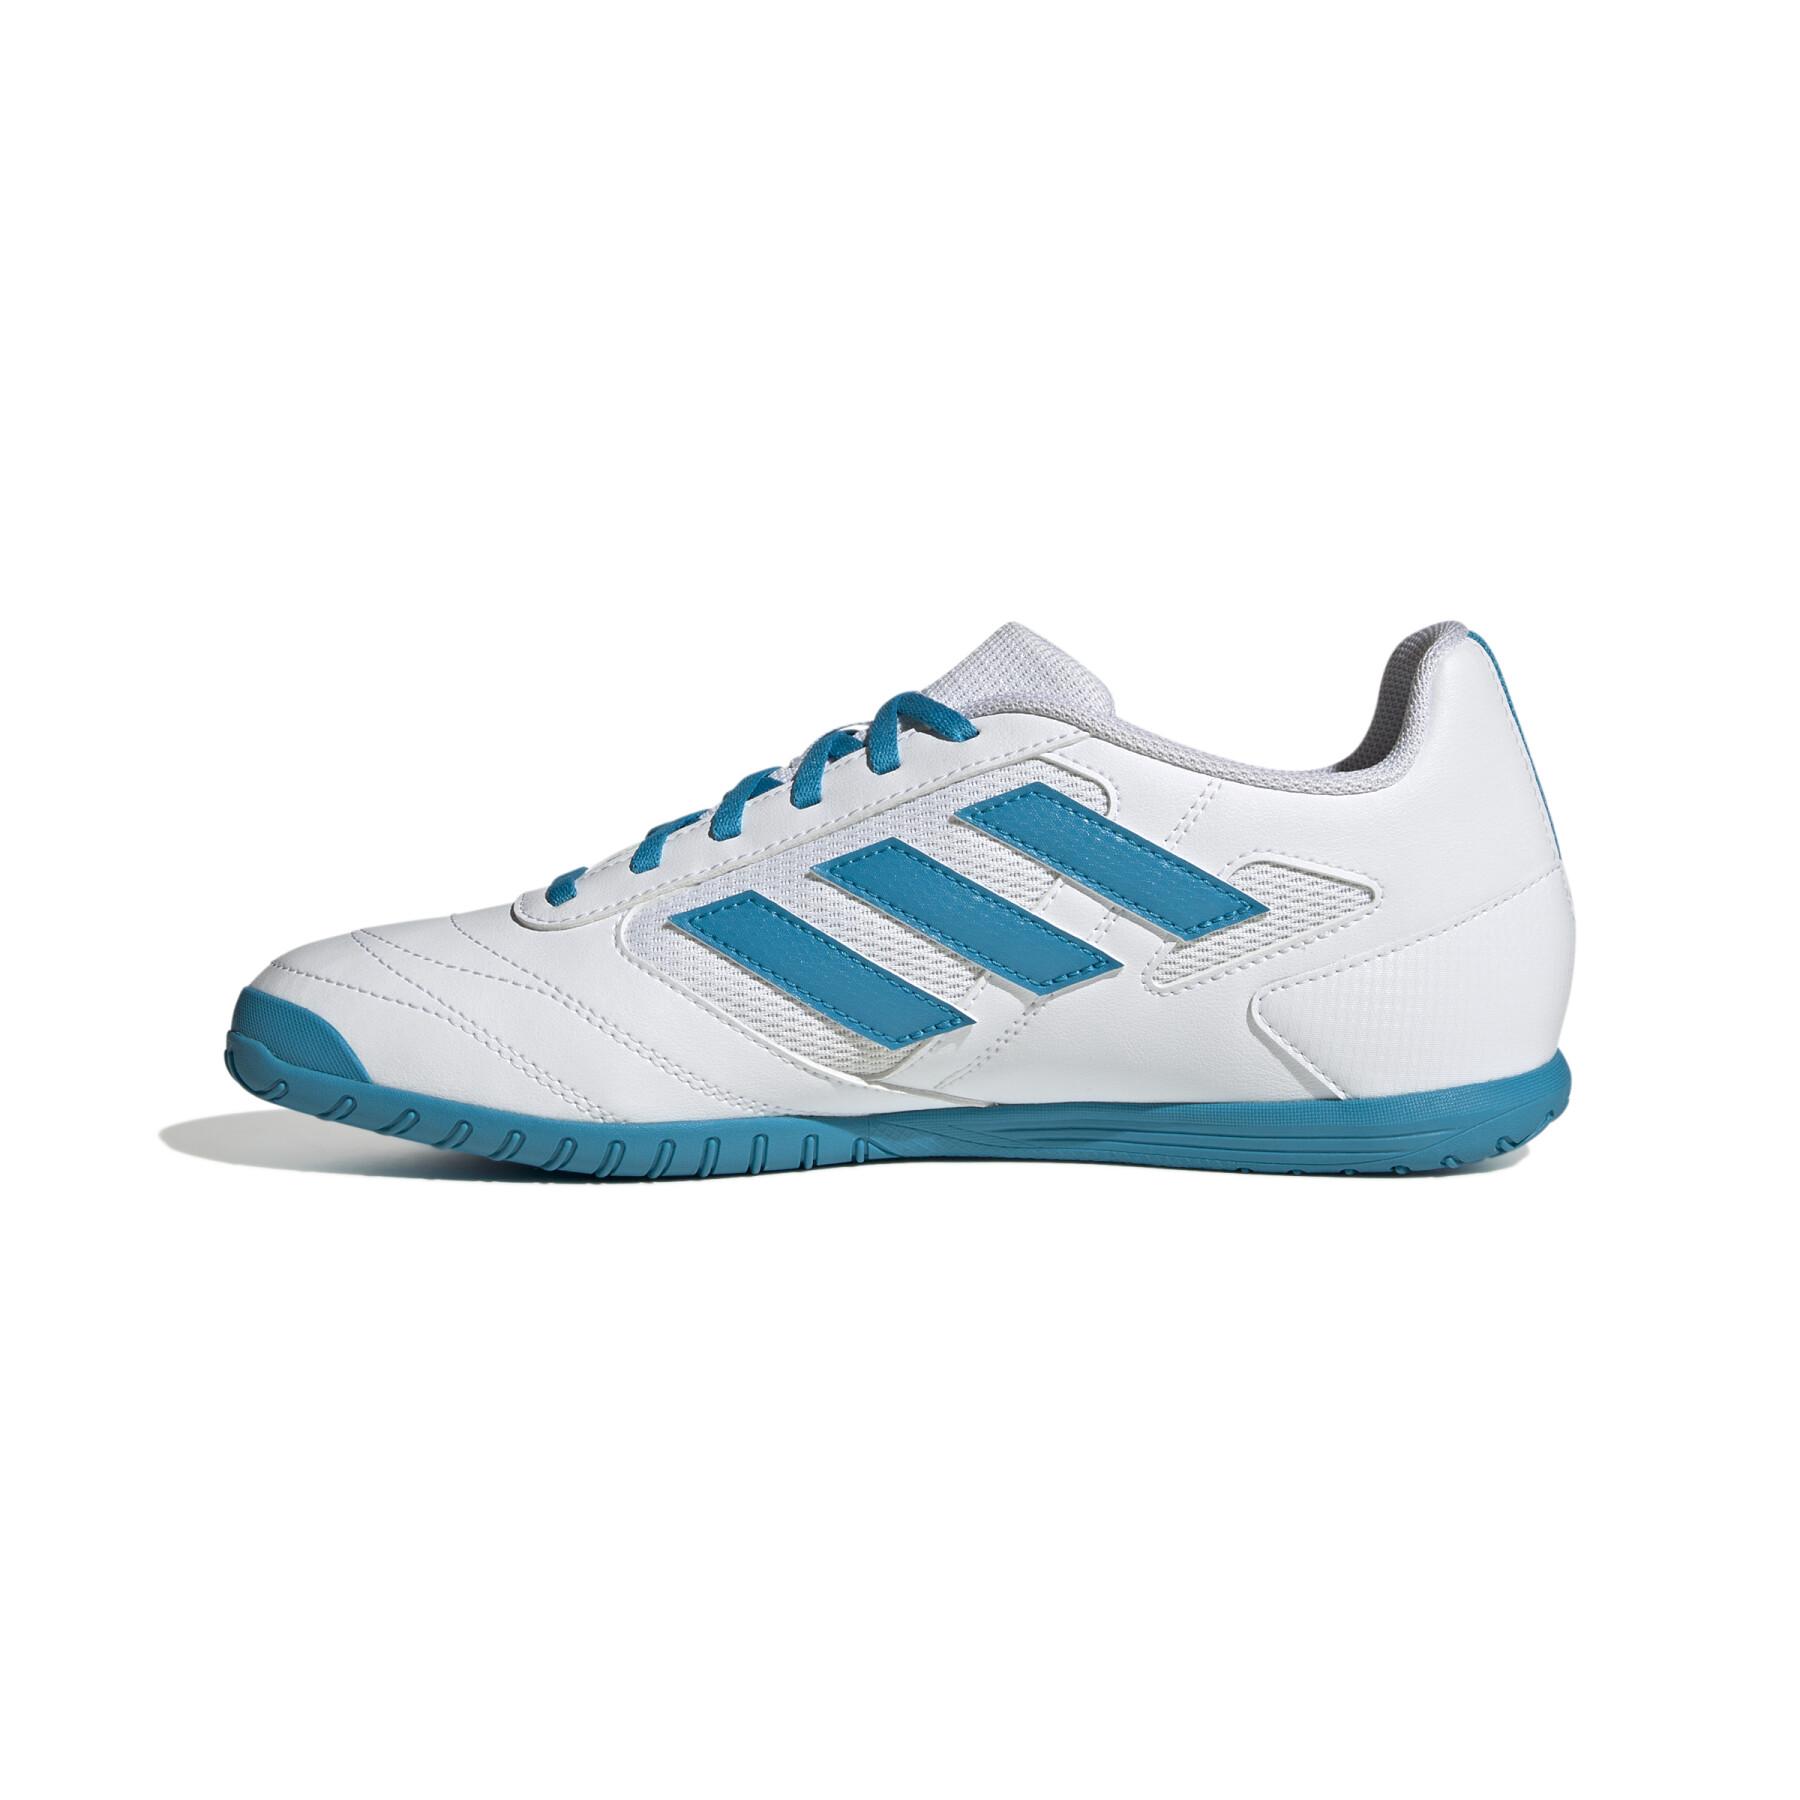 Soccer shoes adidas Super Sala 2